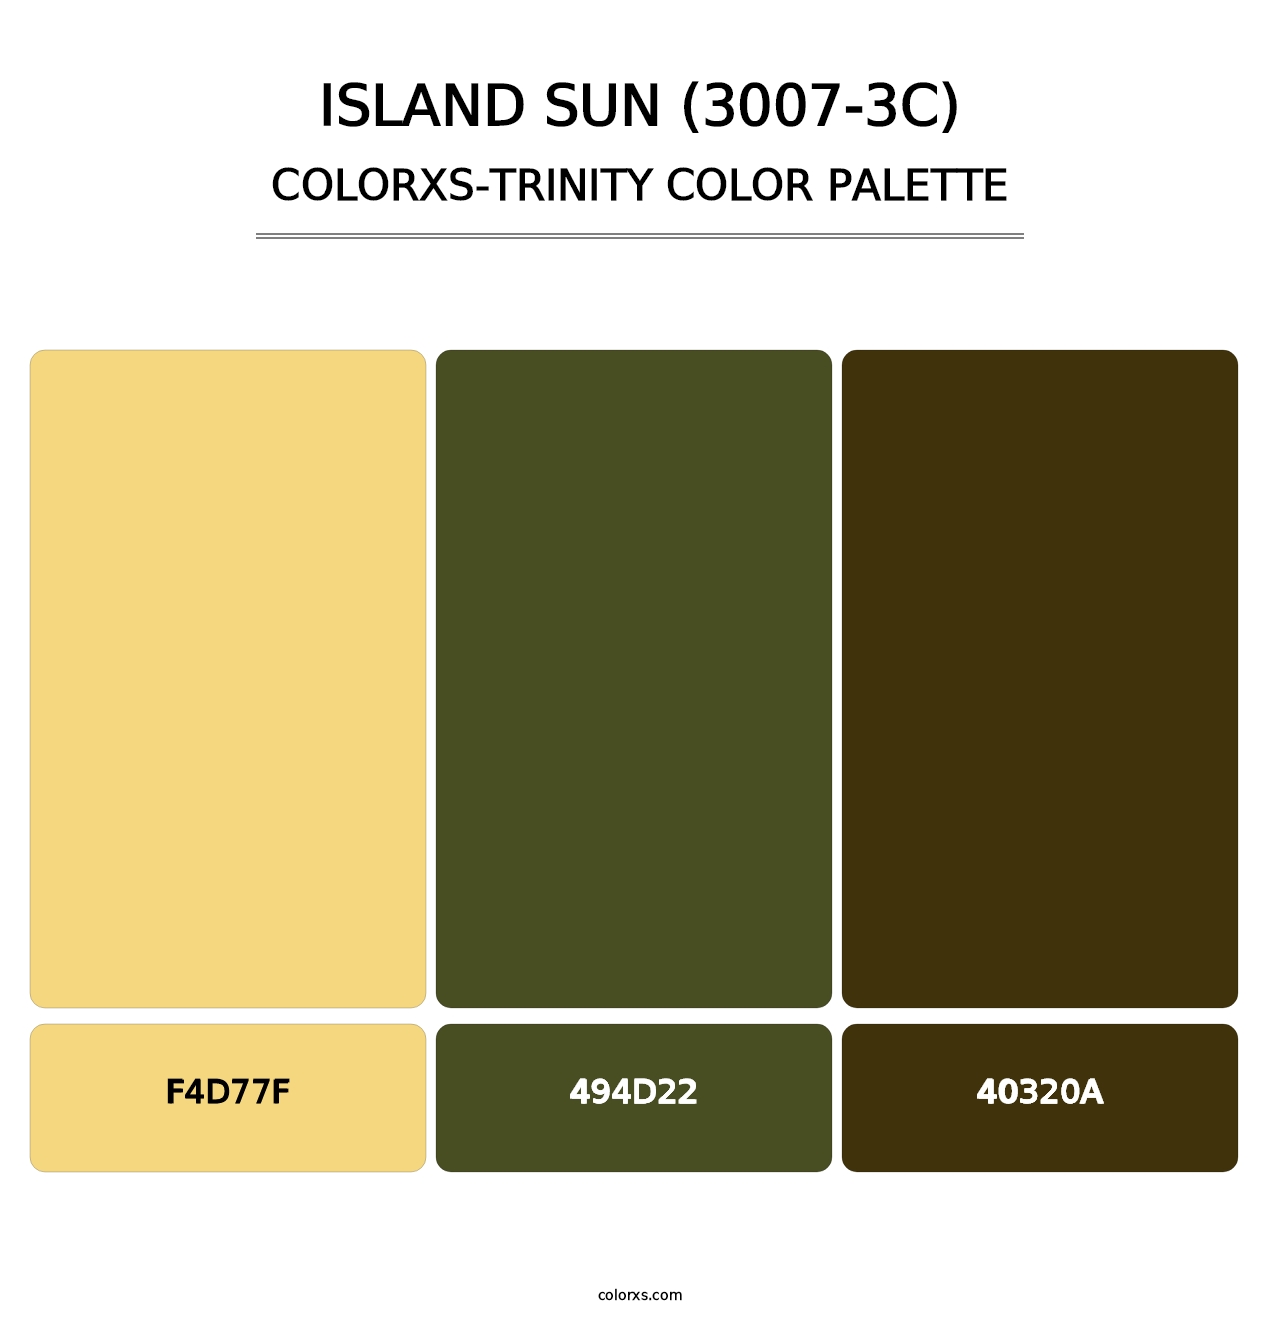 Island Sun (3007-3C) - Colorxs Trinity Palette